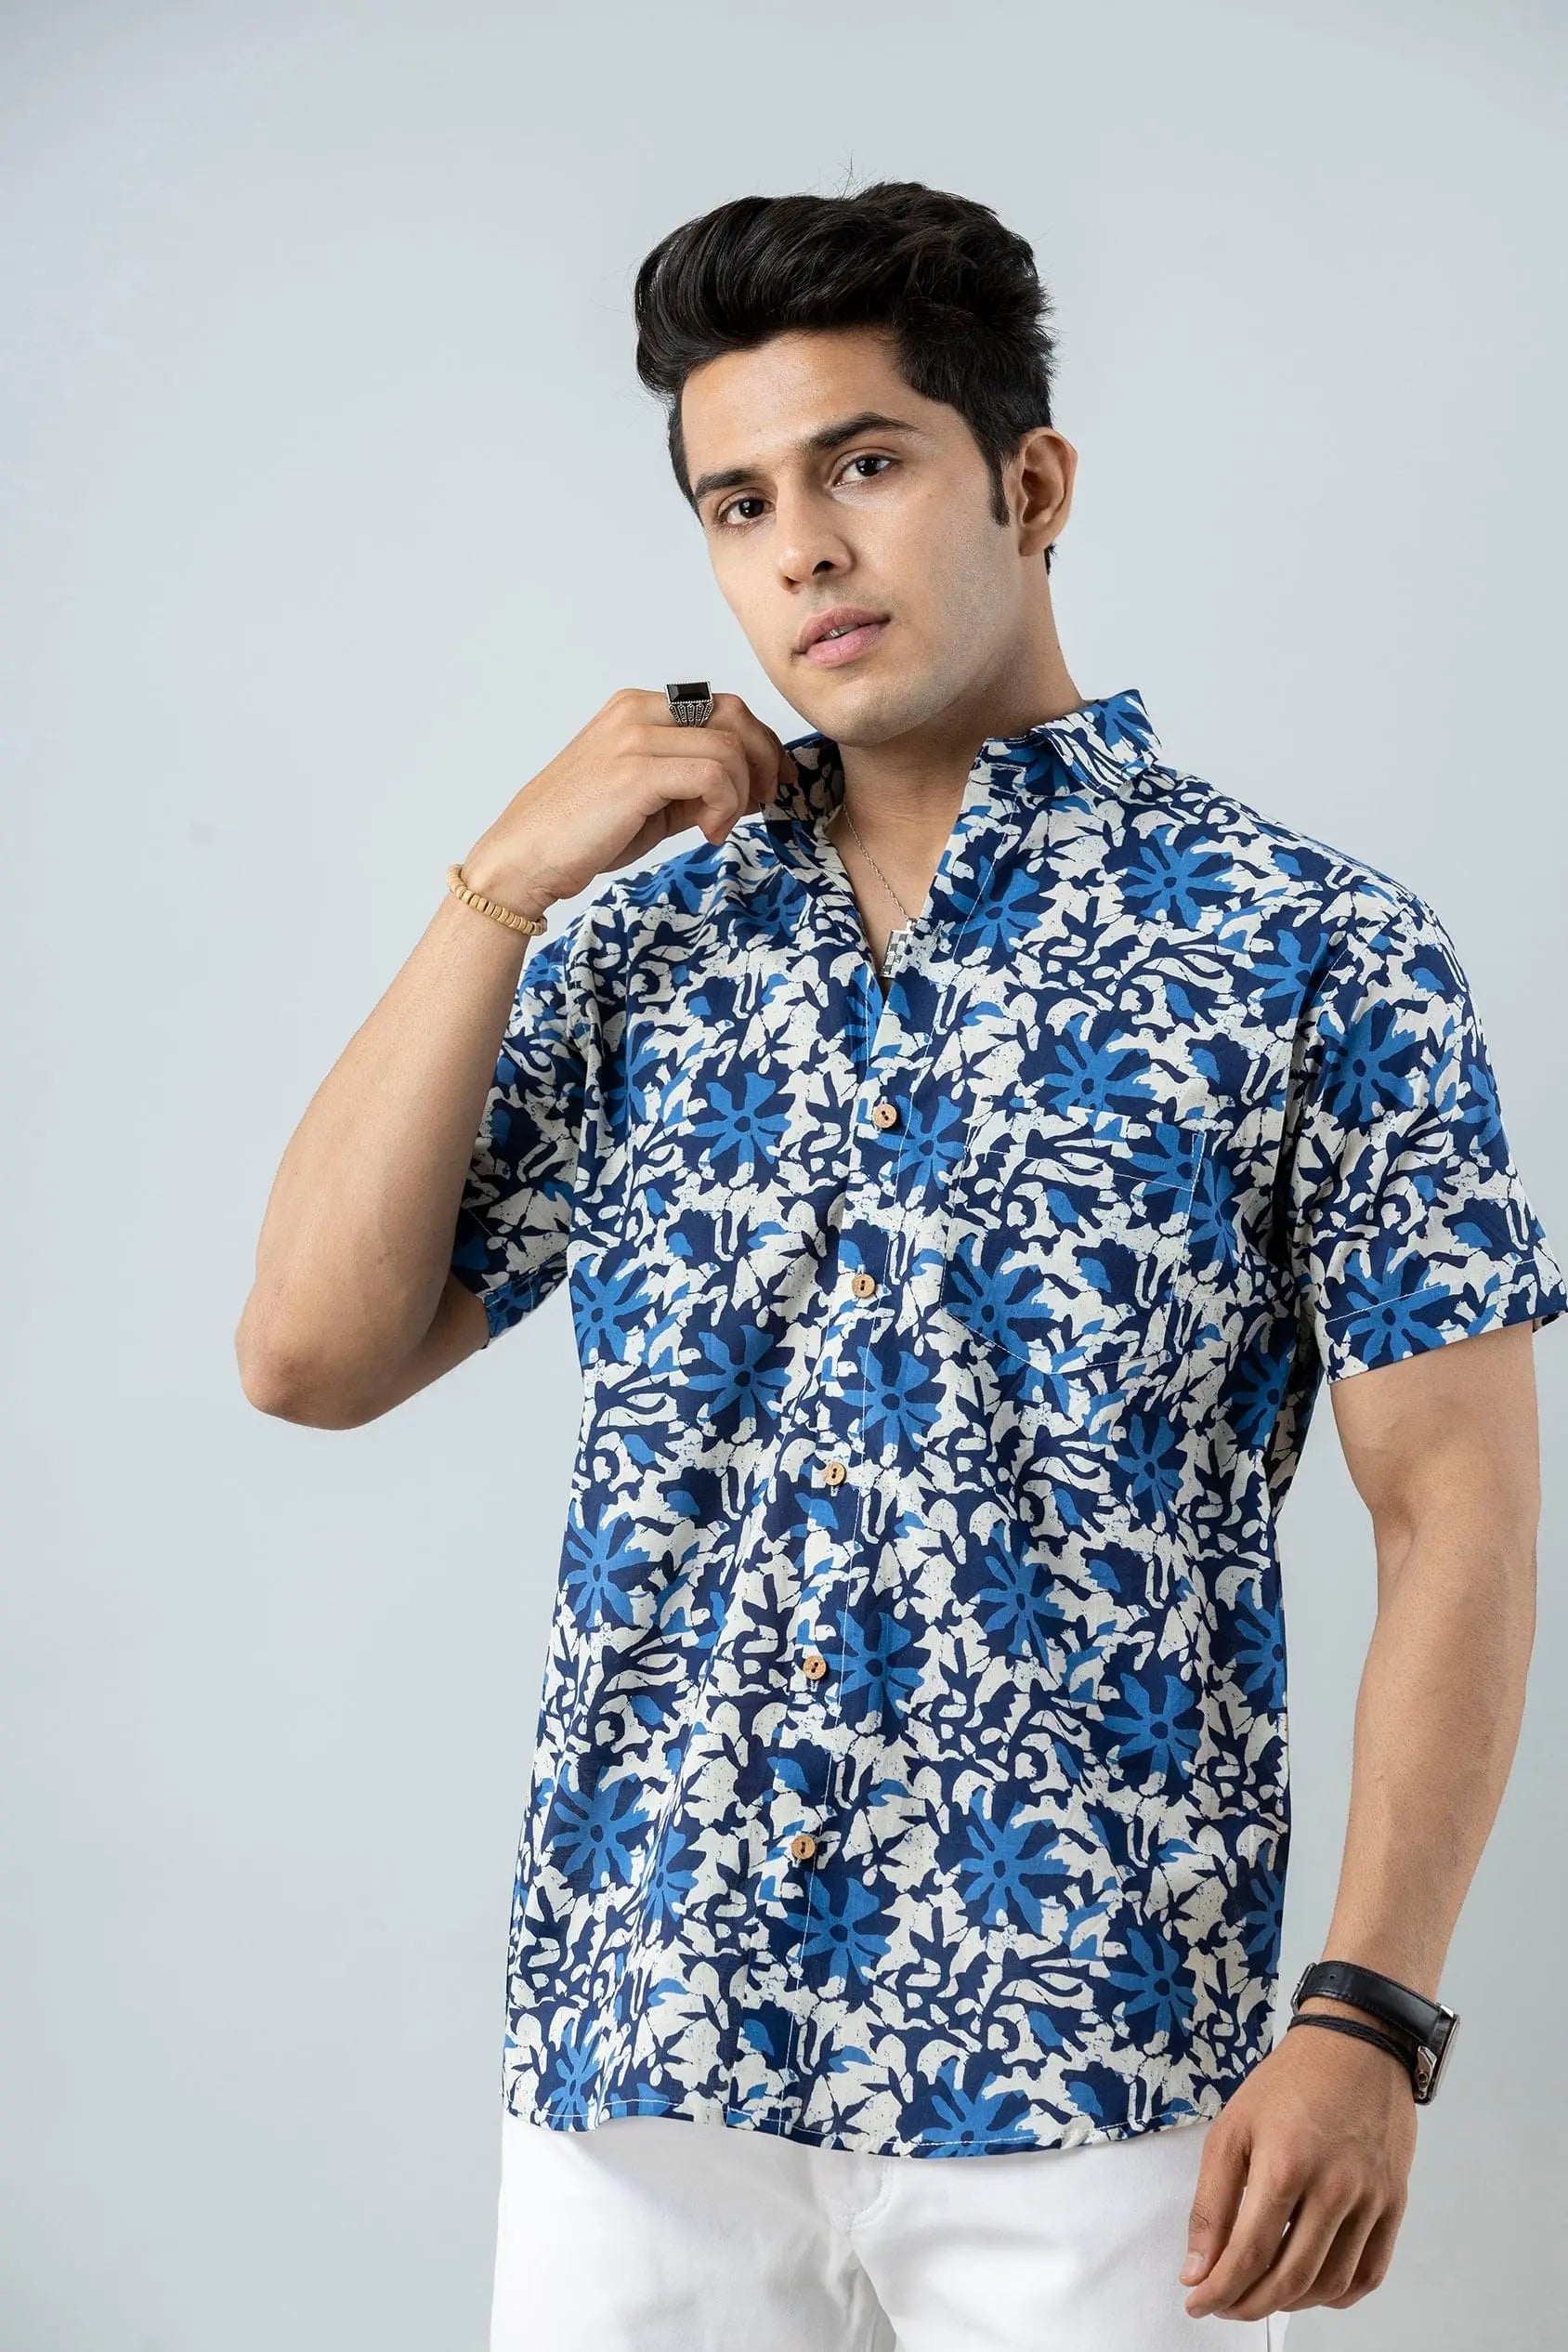 Firangi Yarn Block Printed Cotton Blue Abstract Floral Printed Shirt For Men